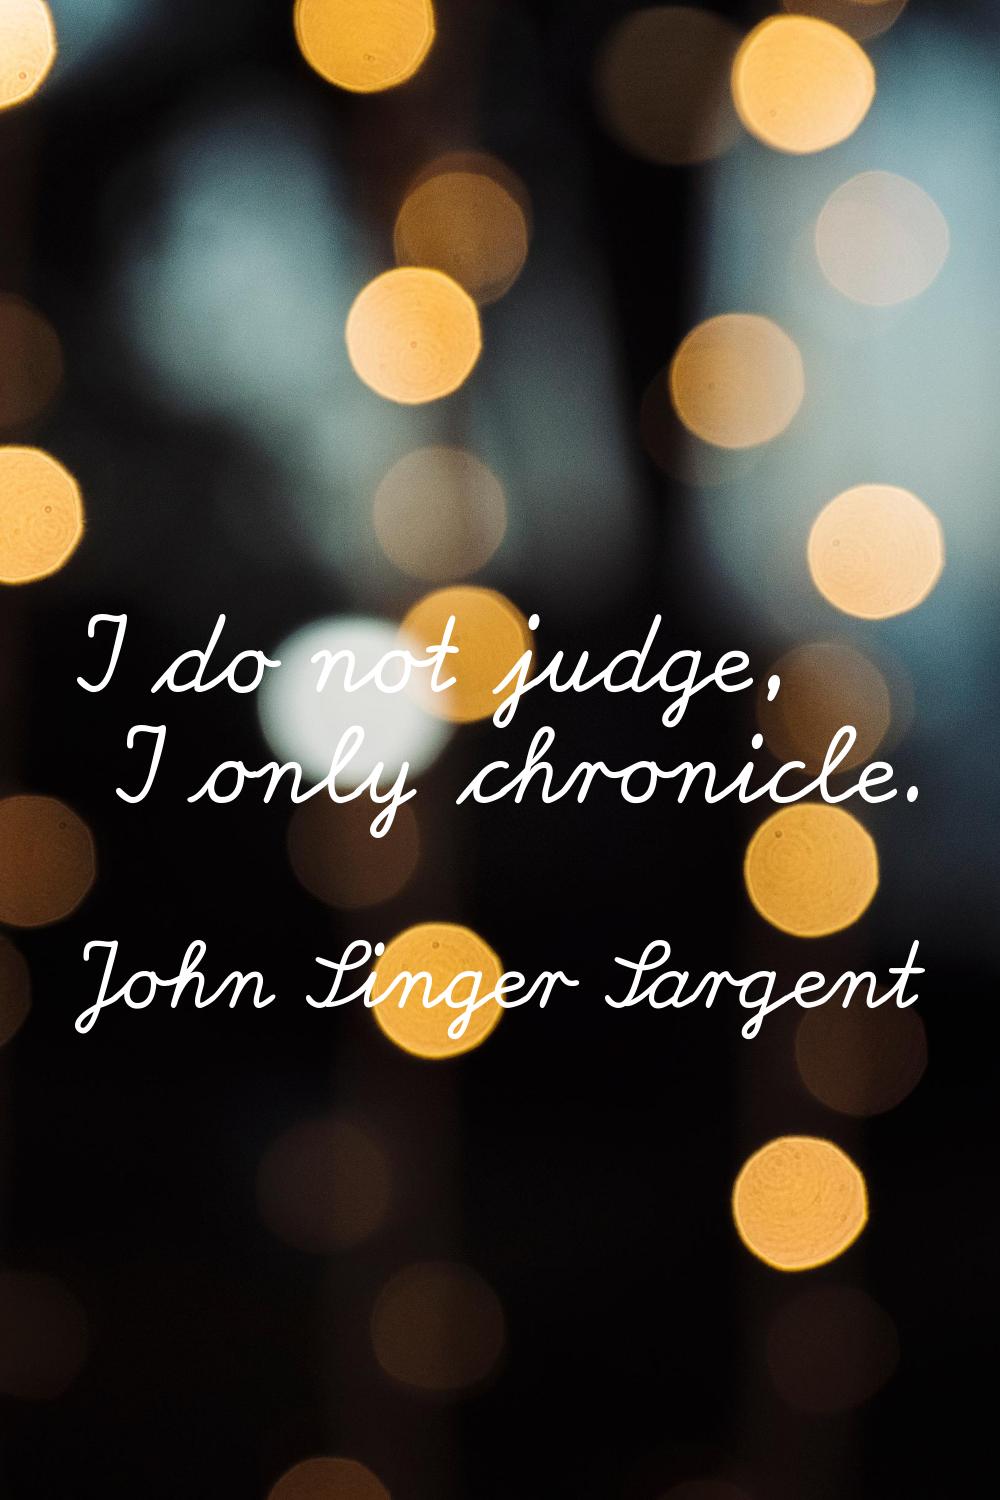 I do not judge, I only chronicle.